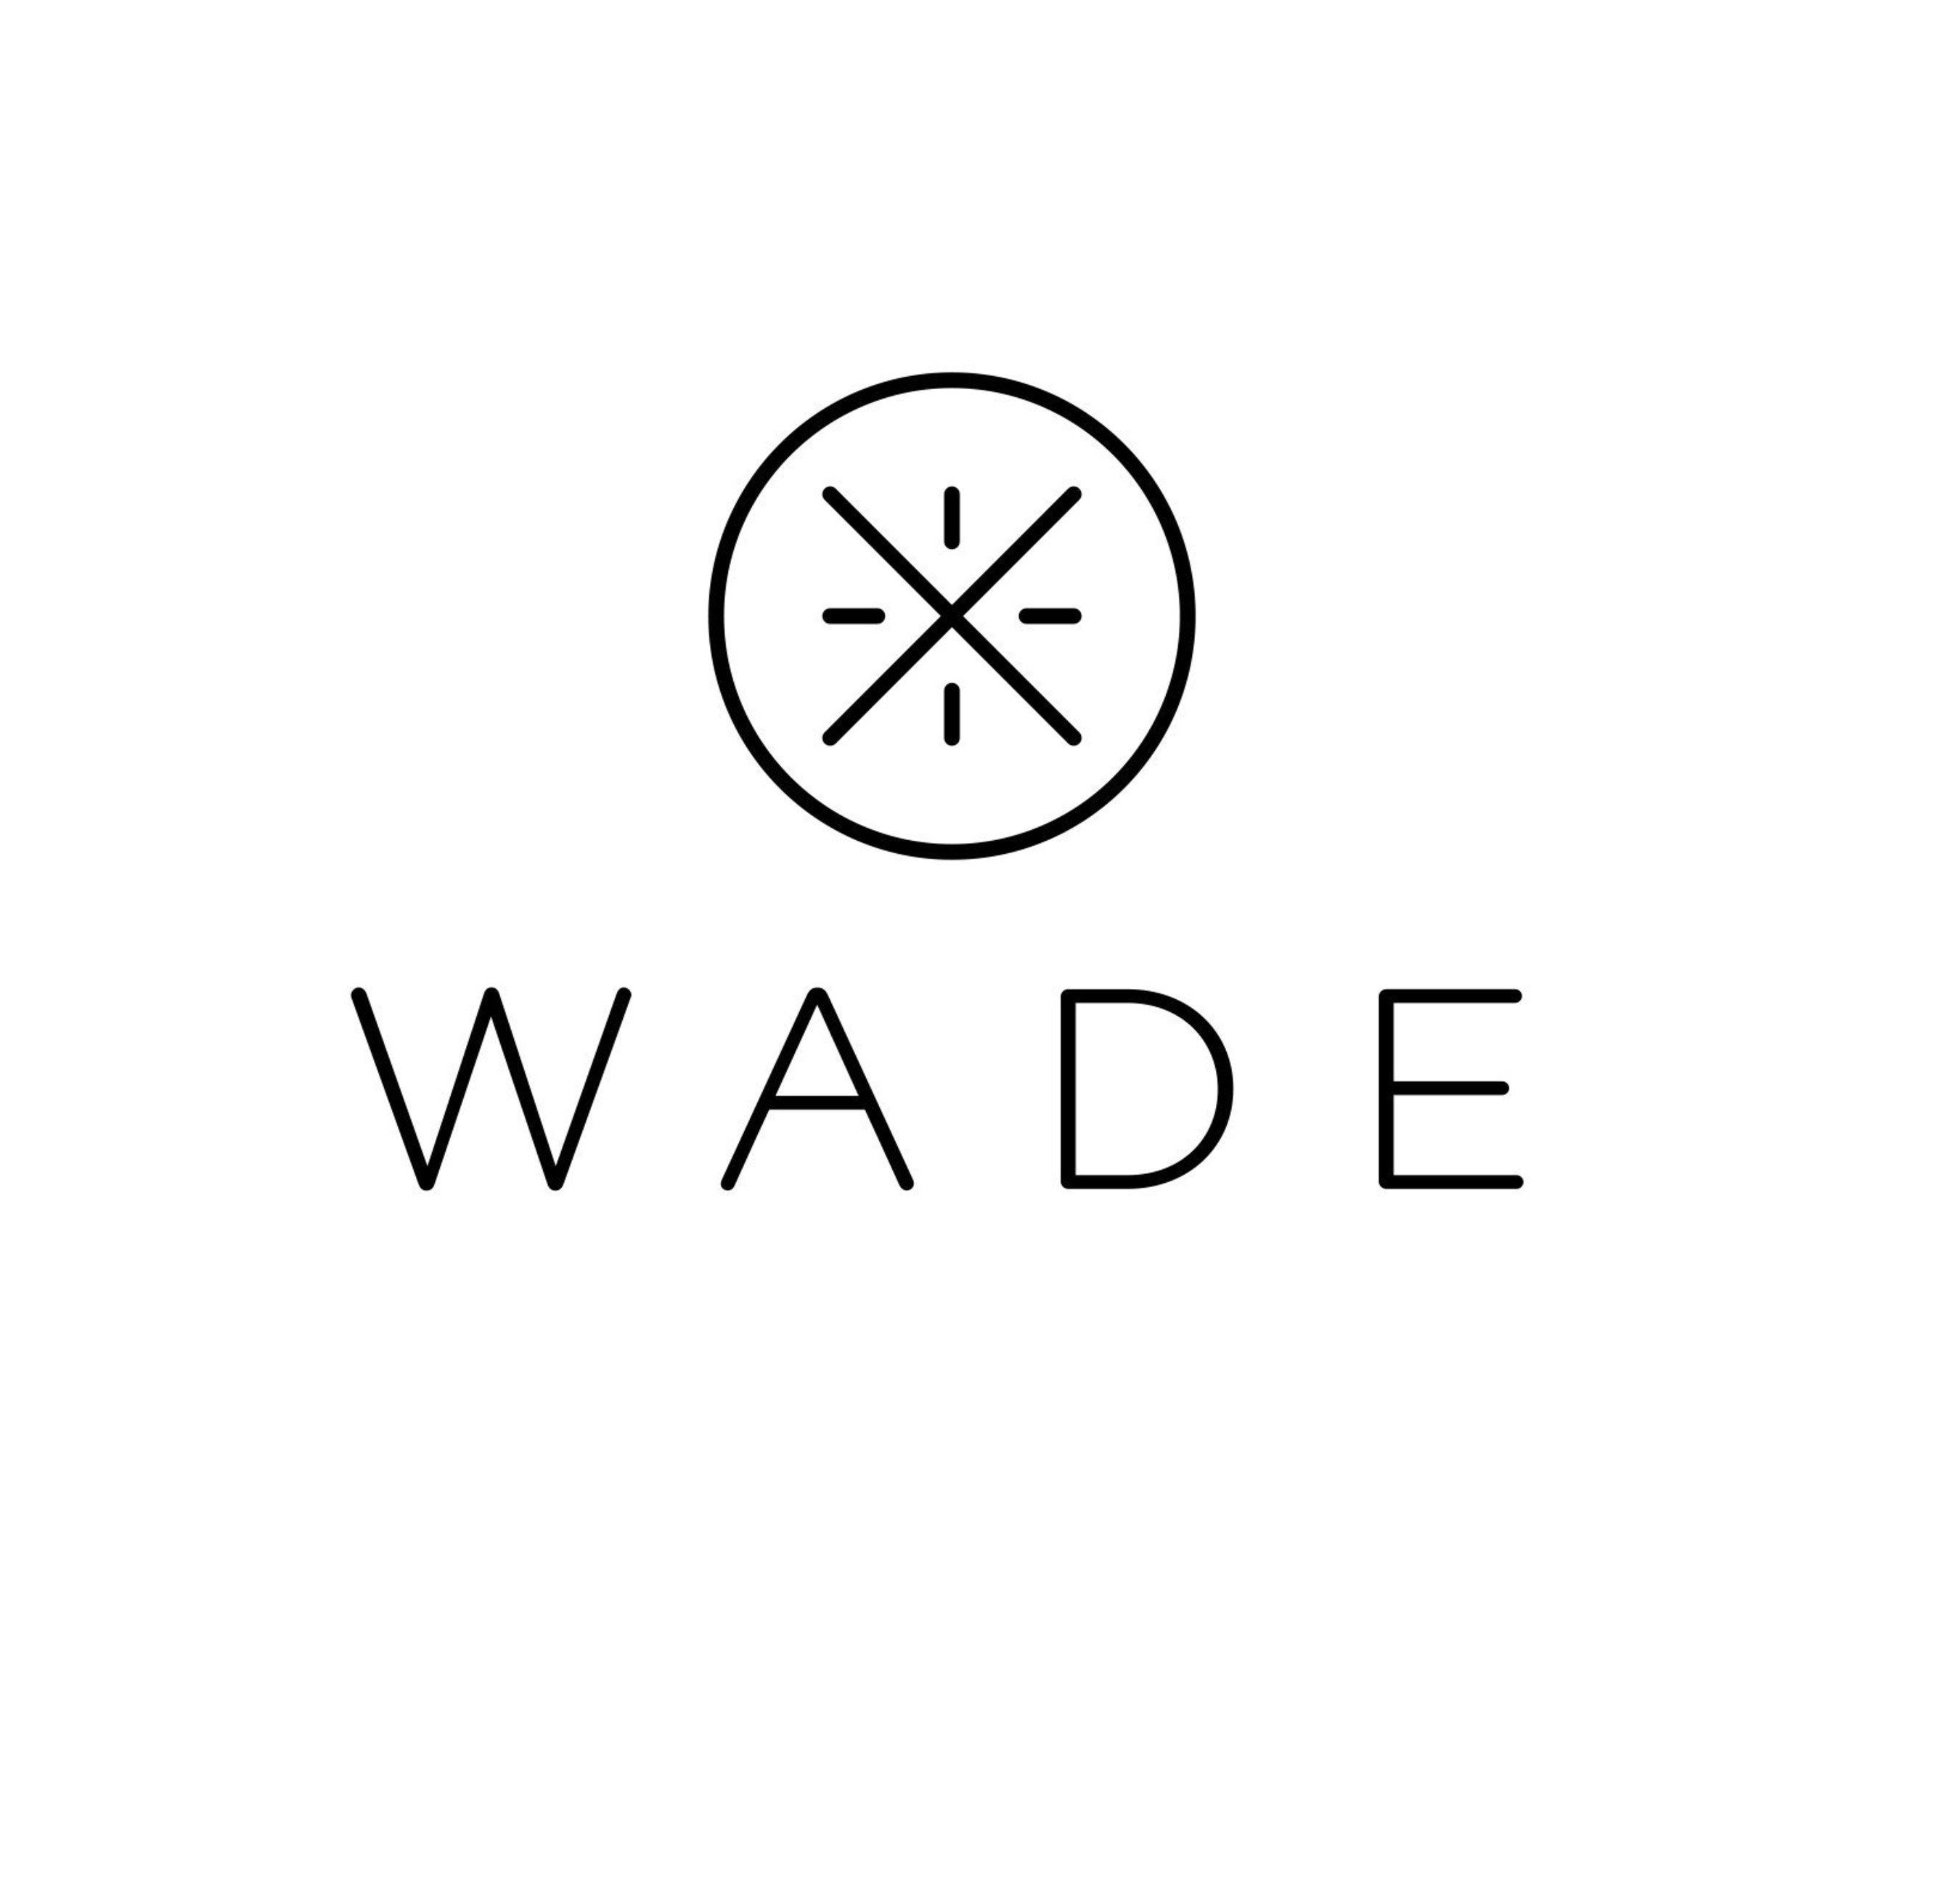 D-Wade Logo - NBA Champion Dwyane Wade and Naked Announce Partnership to Grow